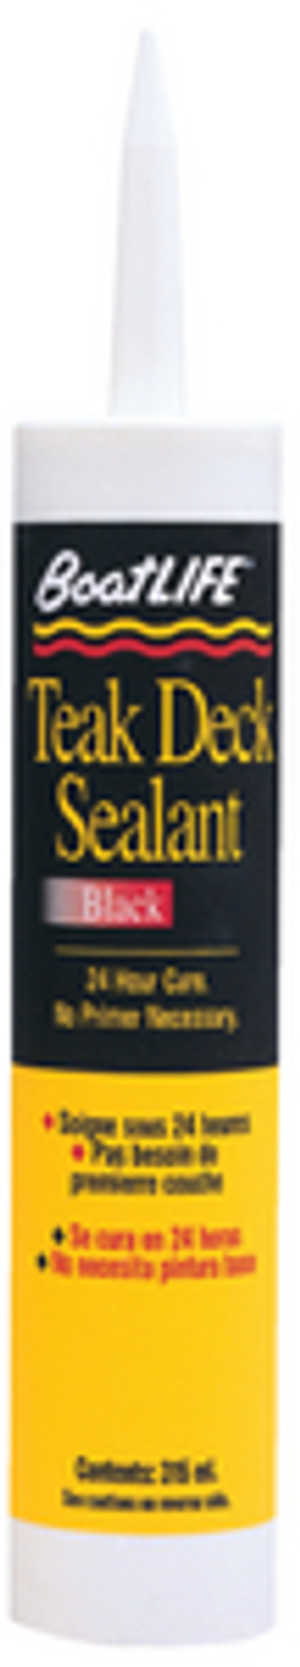 BOAT LIFE 1252 TEAK DECK SEALANT CART.-BLACK